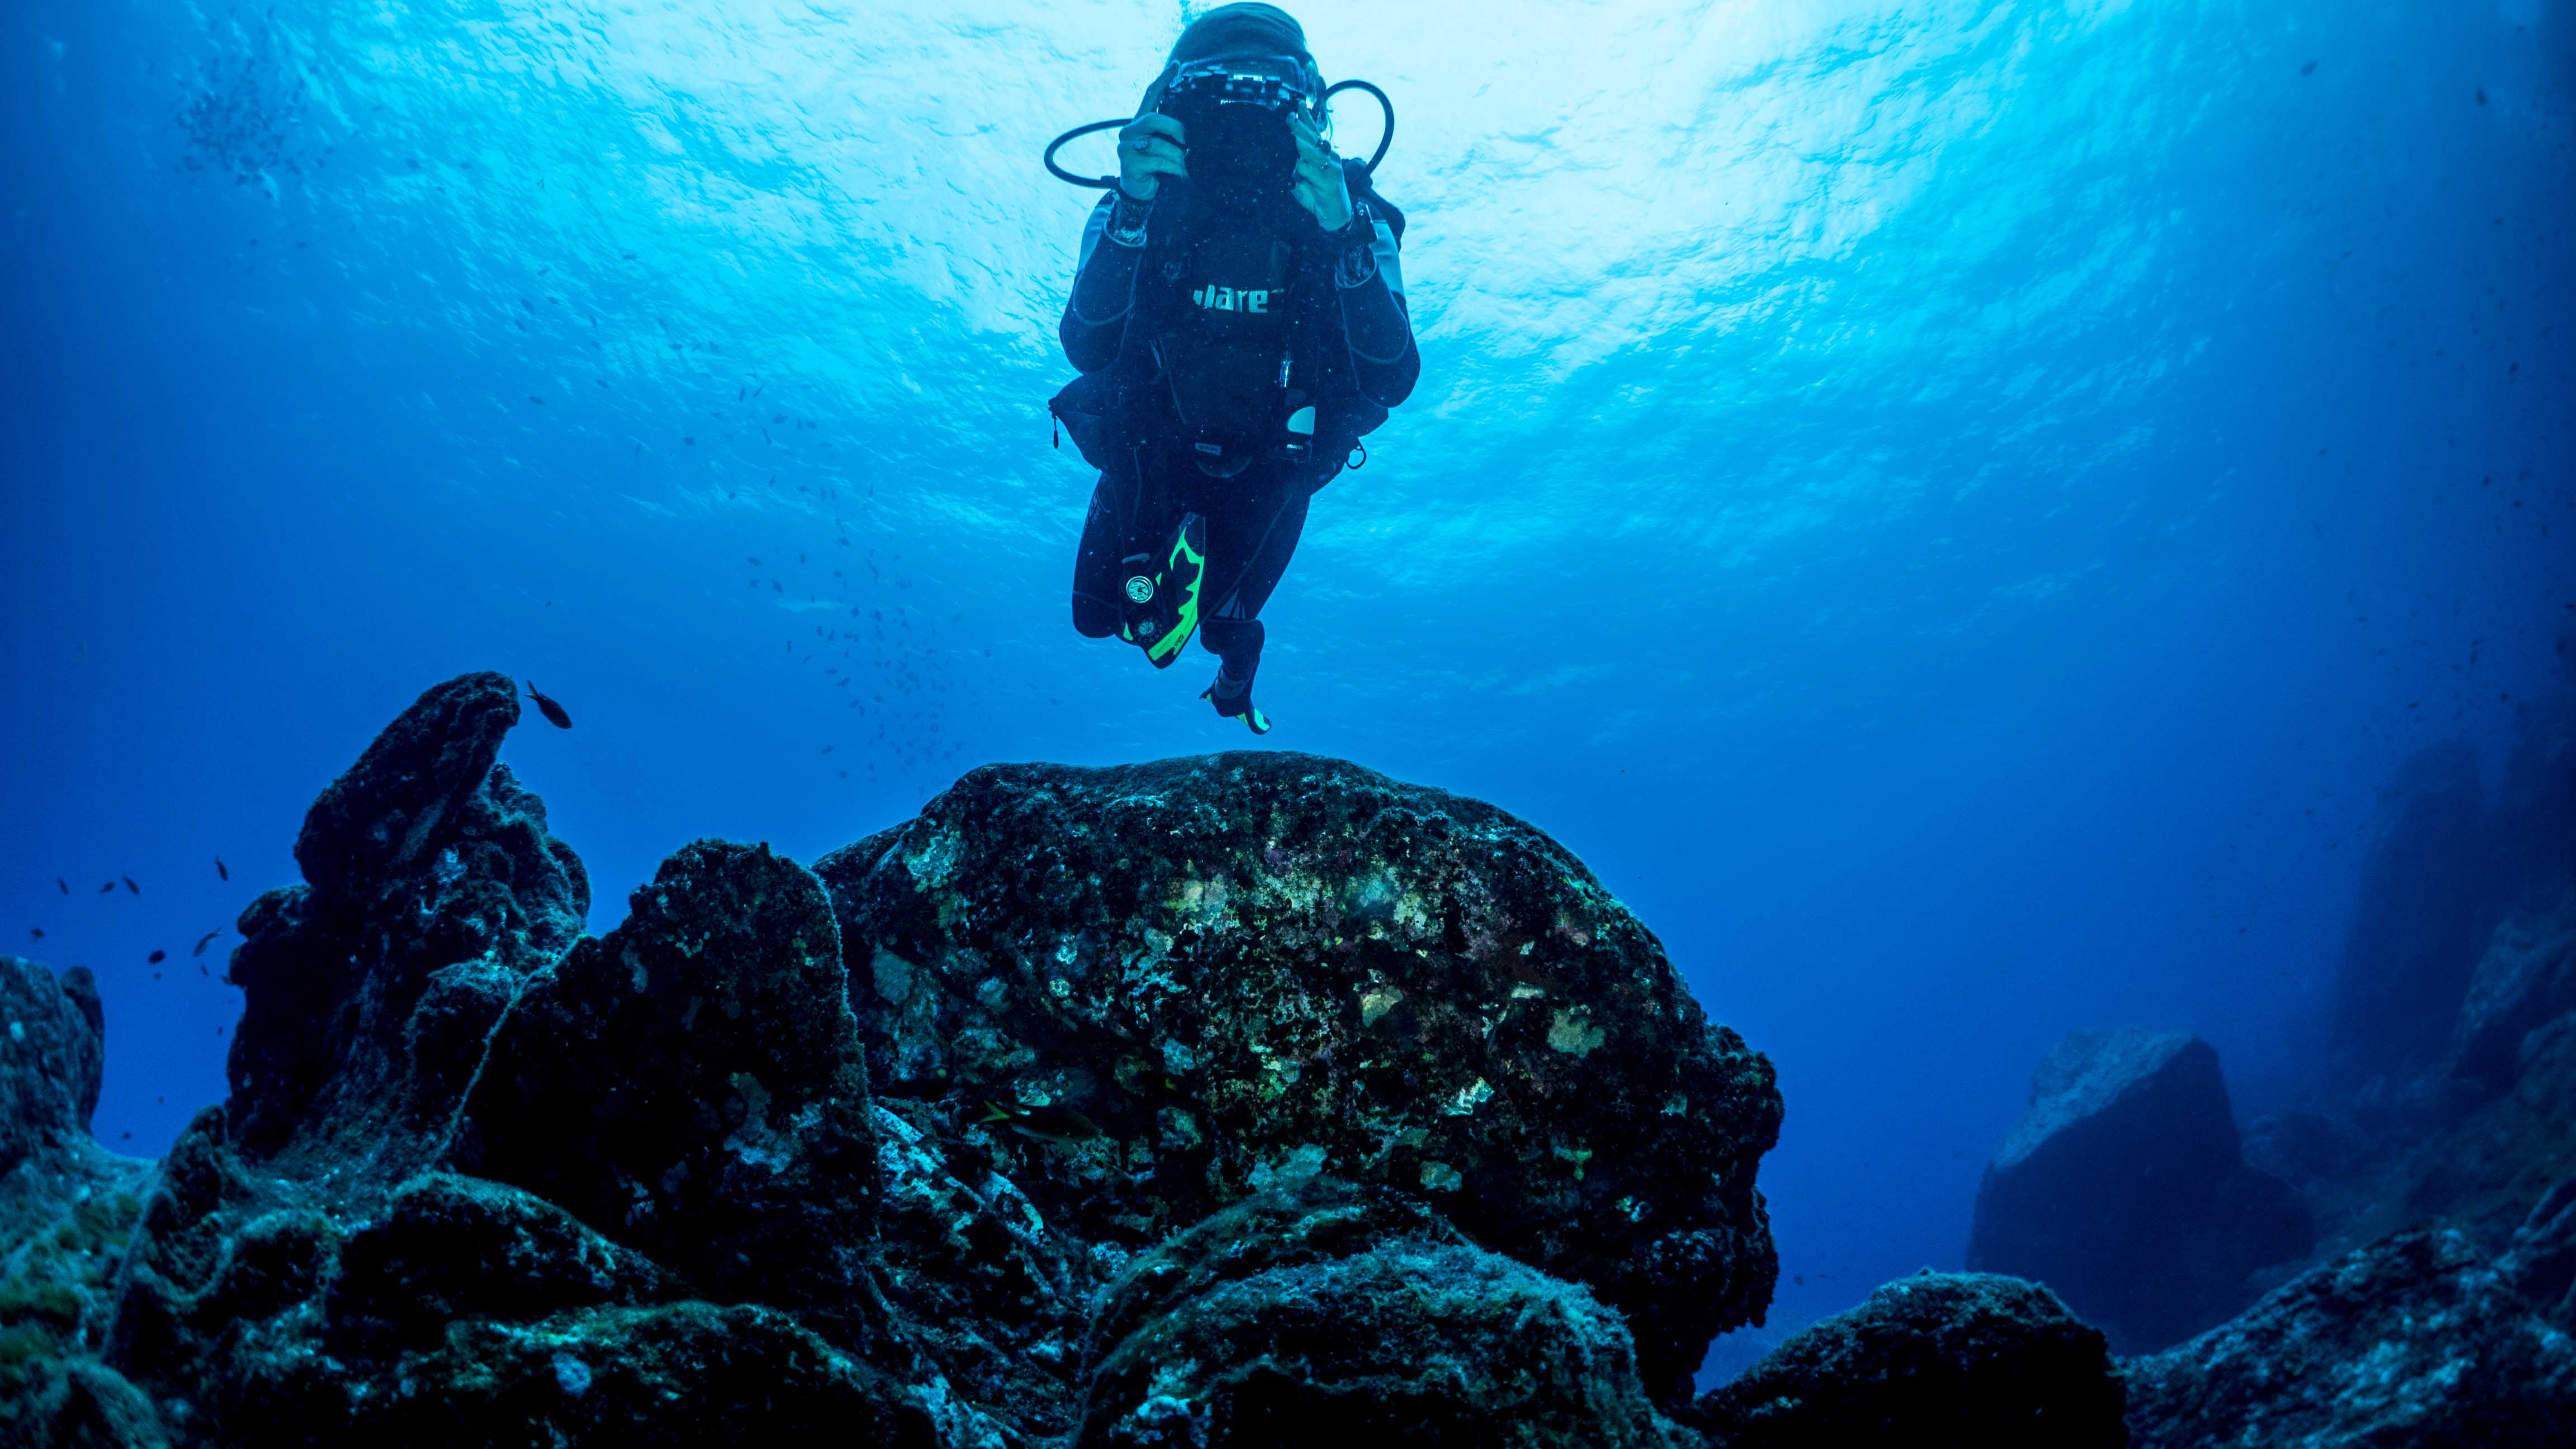 Ascension Island: A underwater wonderland with an uncertain future